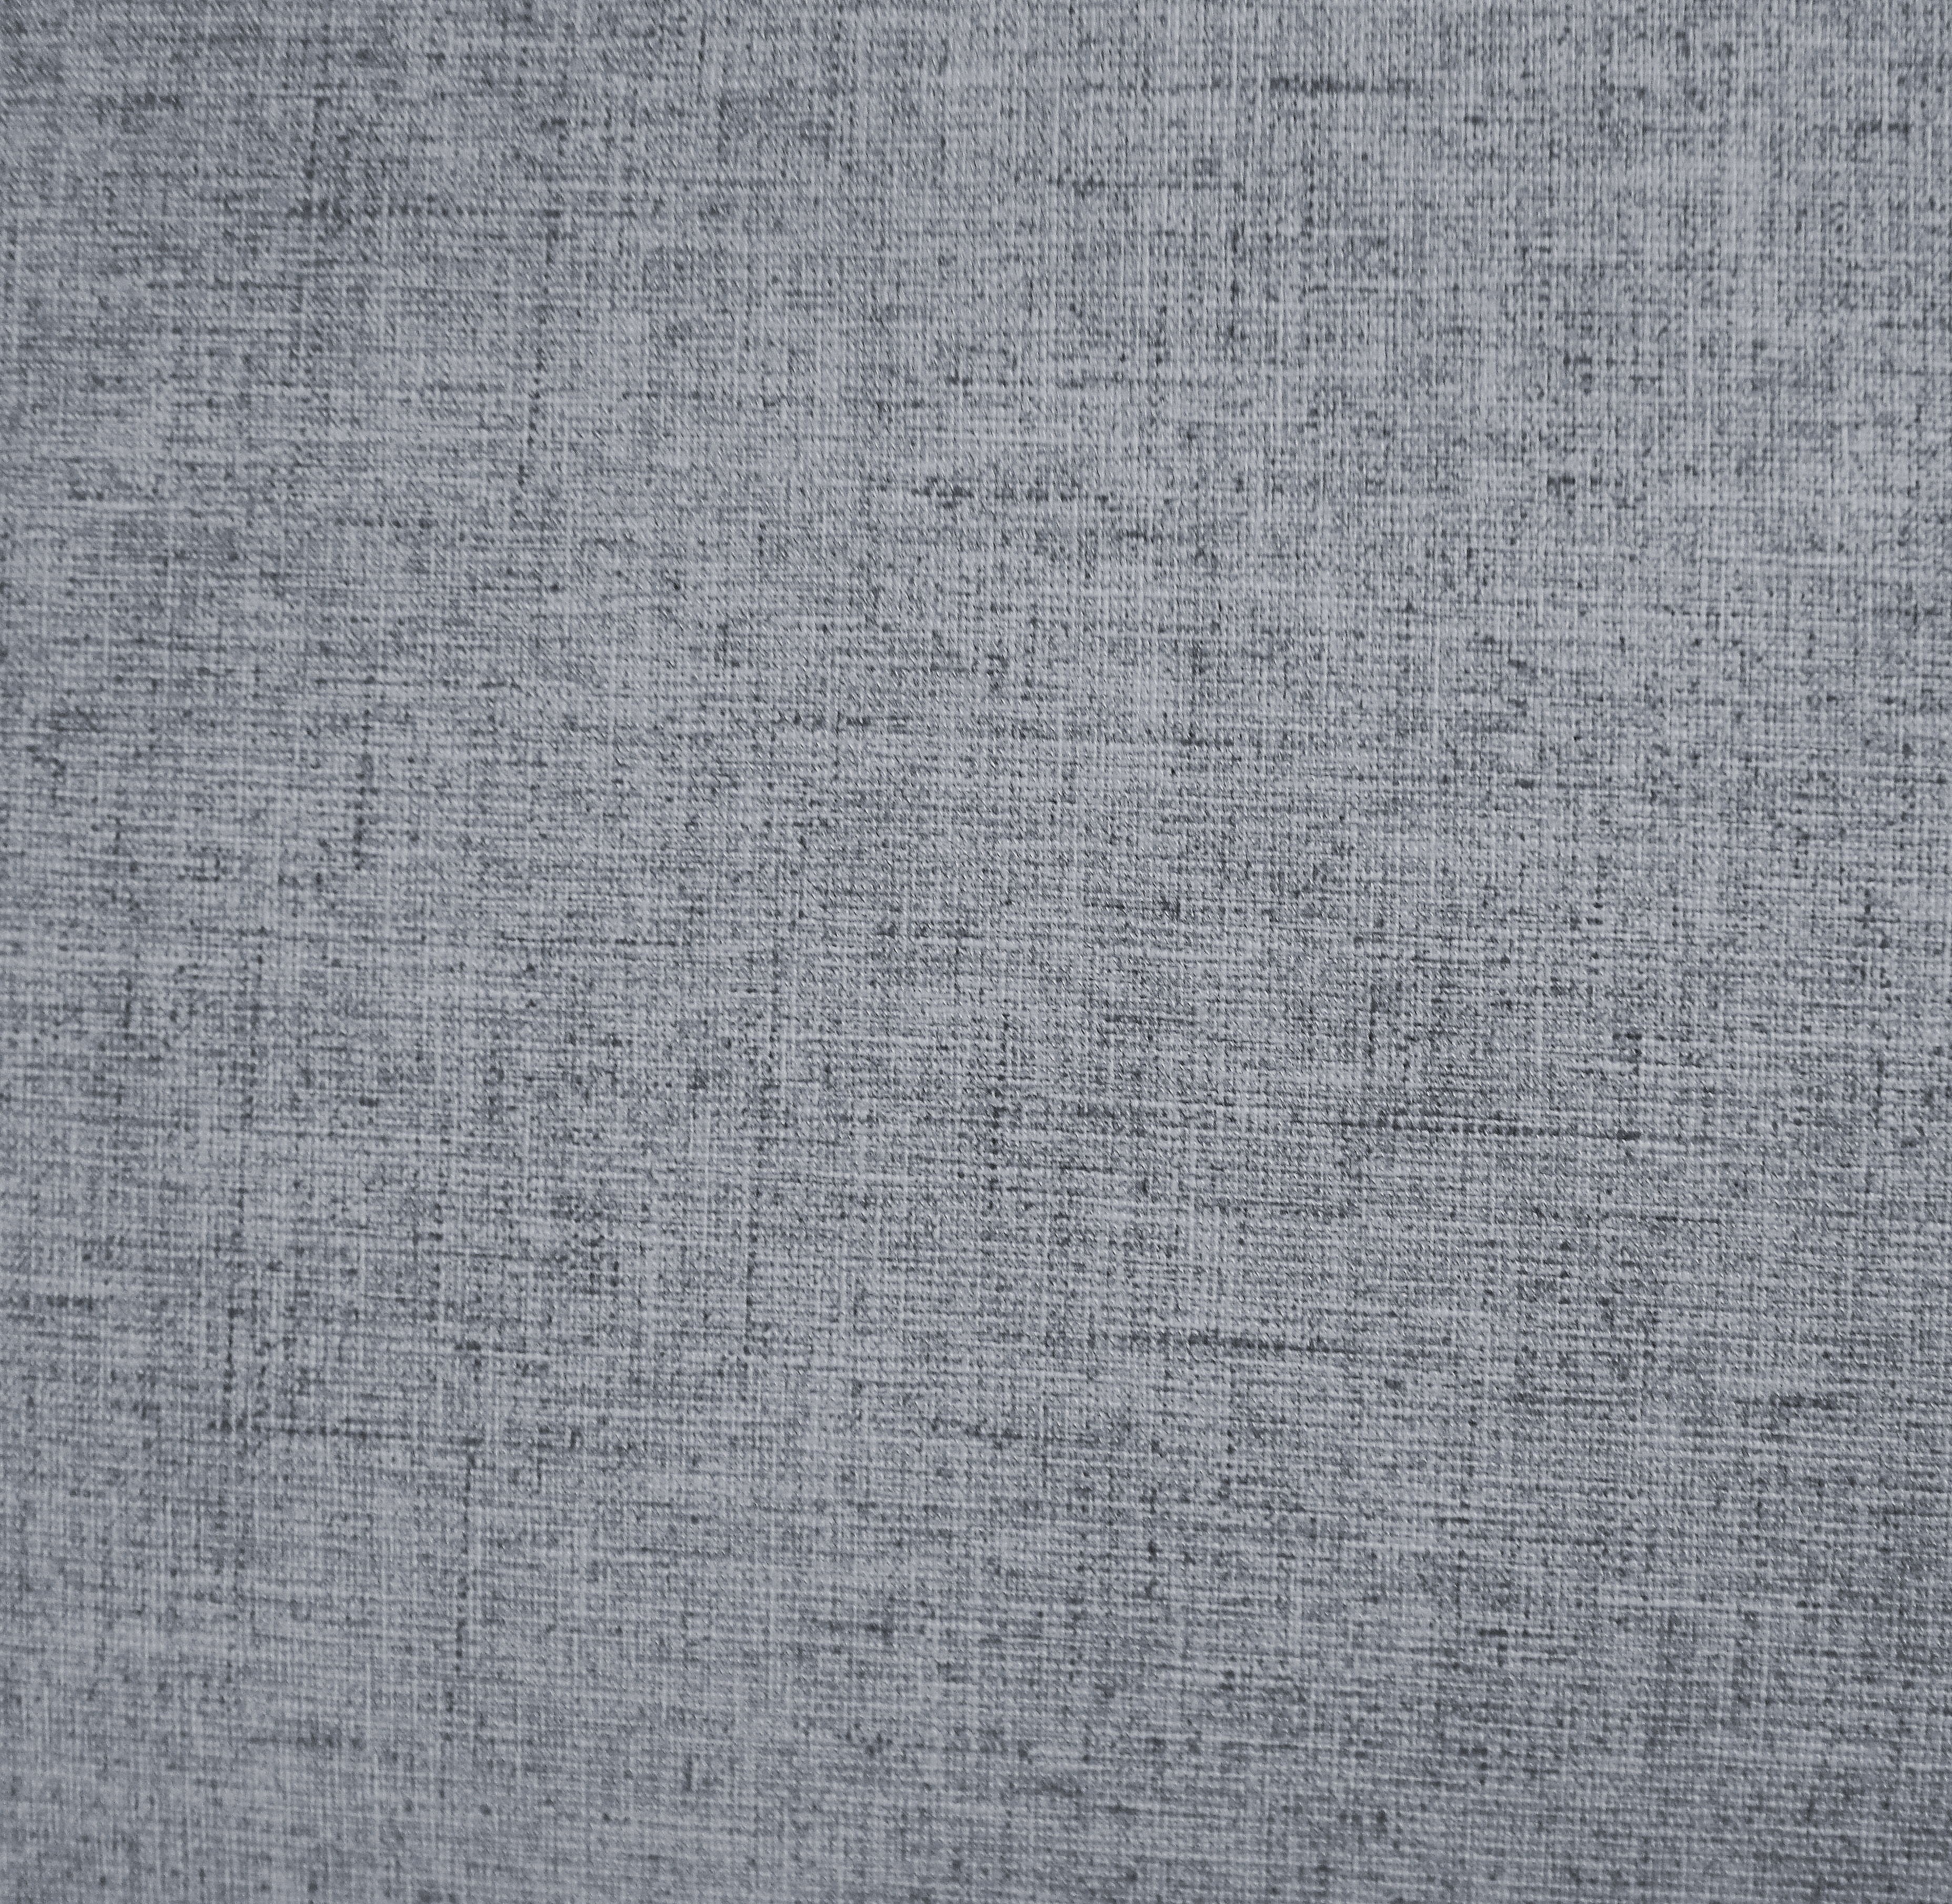 2033 Gray Cloth Grain Leather (PU) Leisure Two-Seat Sofa